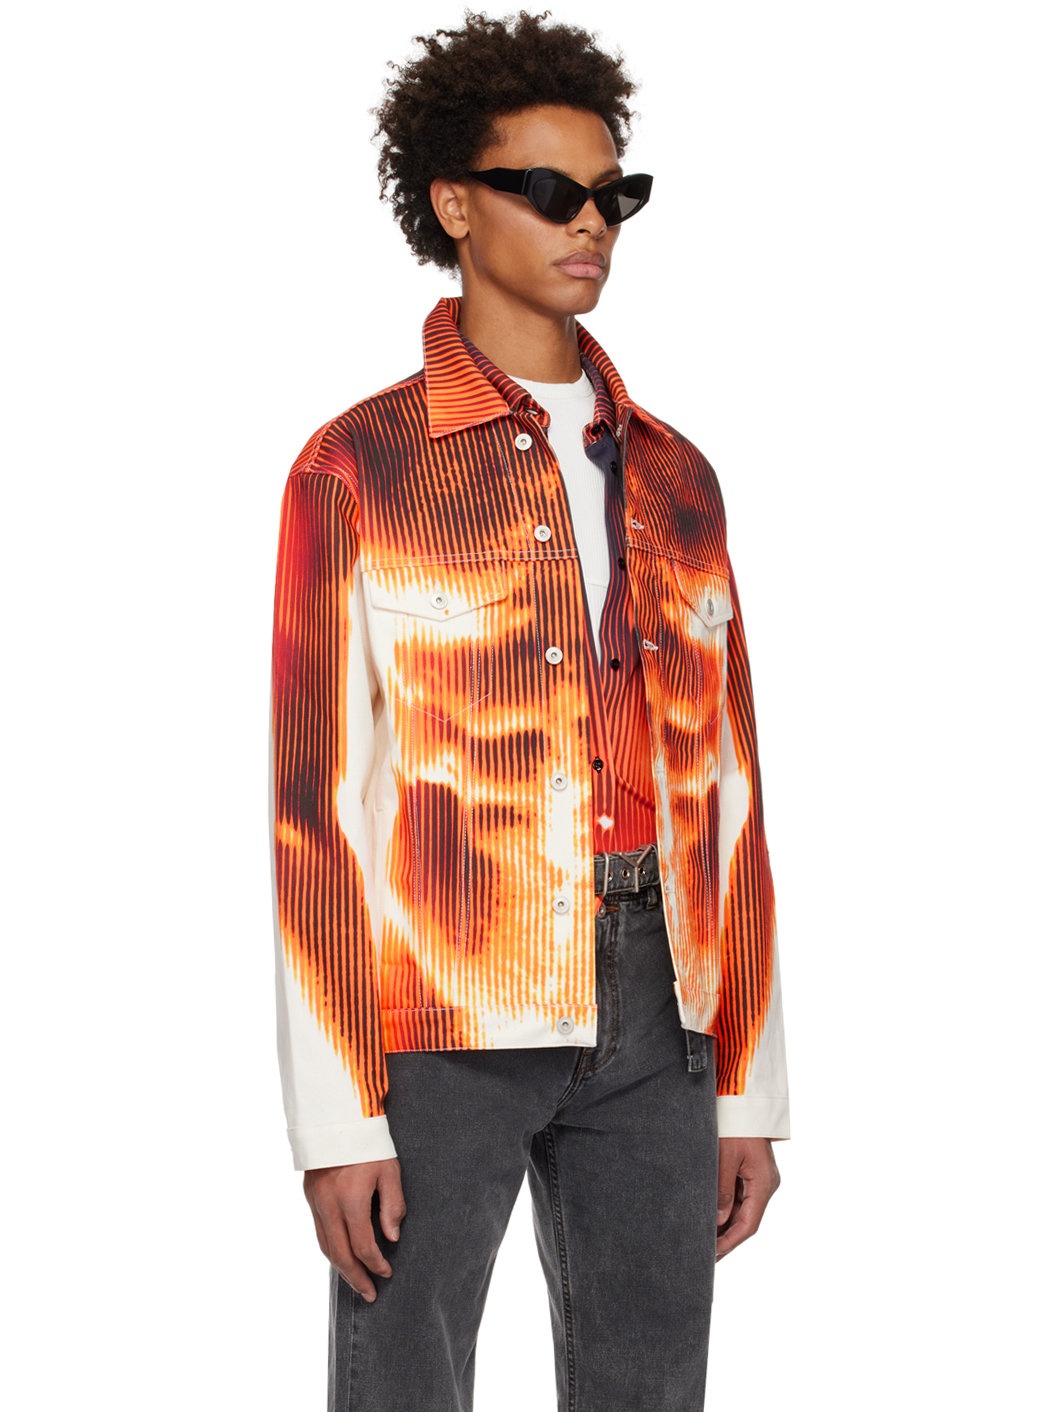 SSENSE Exclusive White & Orange Jean Paul Gaultier Edition Denim Jacket - 2